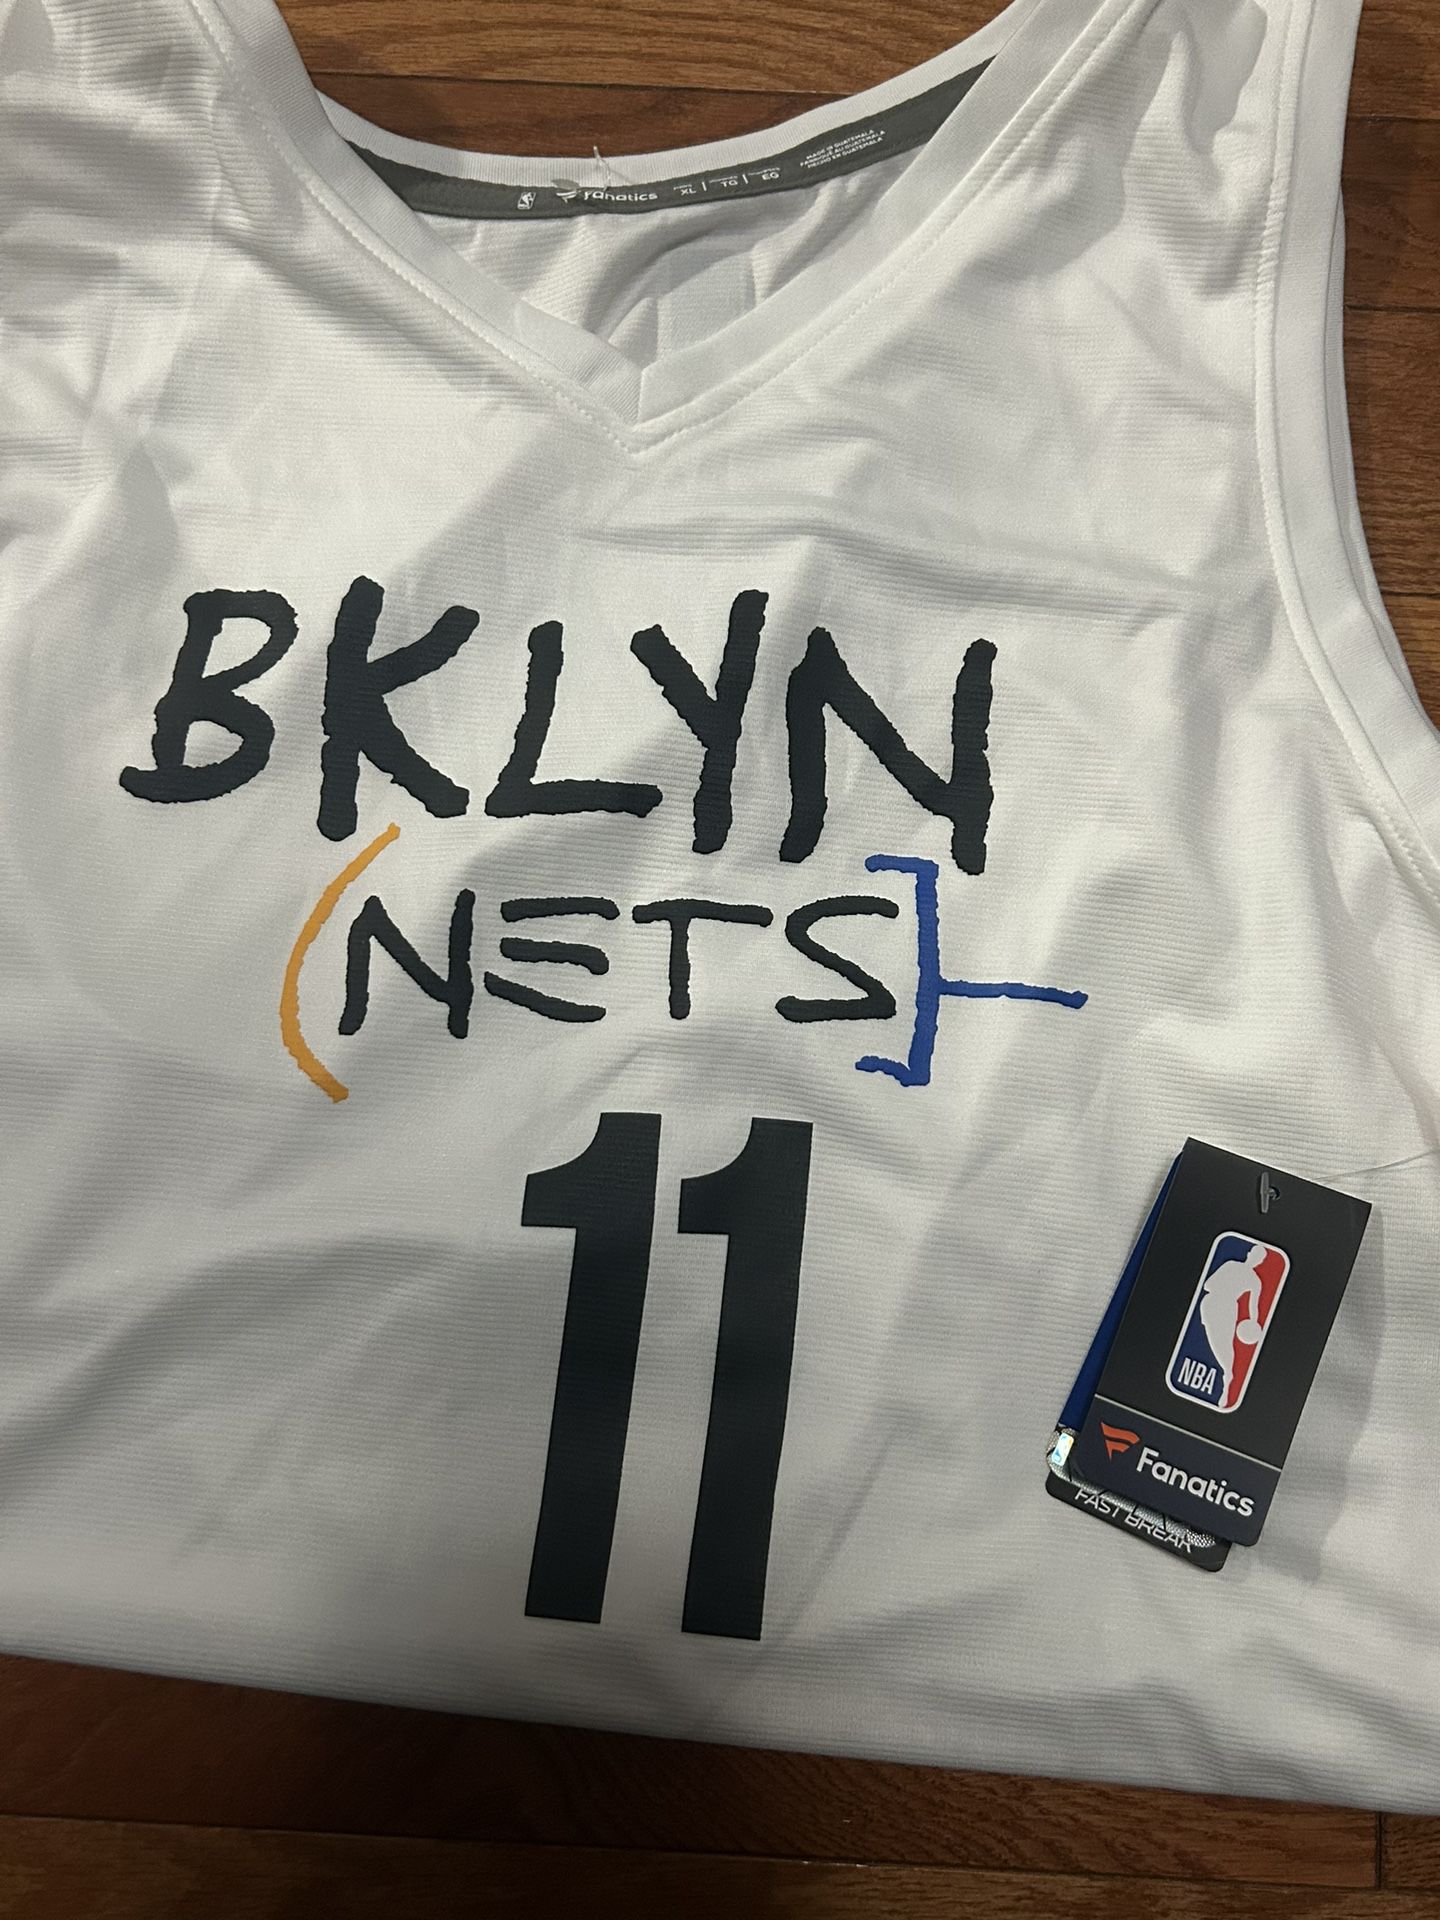 Nike Swingman Brooklyn Nets Kyrie Irving Basquiat Jersey NWT Size Xl for  Sale in Alexandria, VA - OfferUp